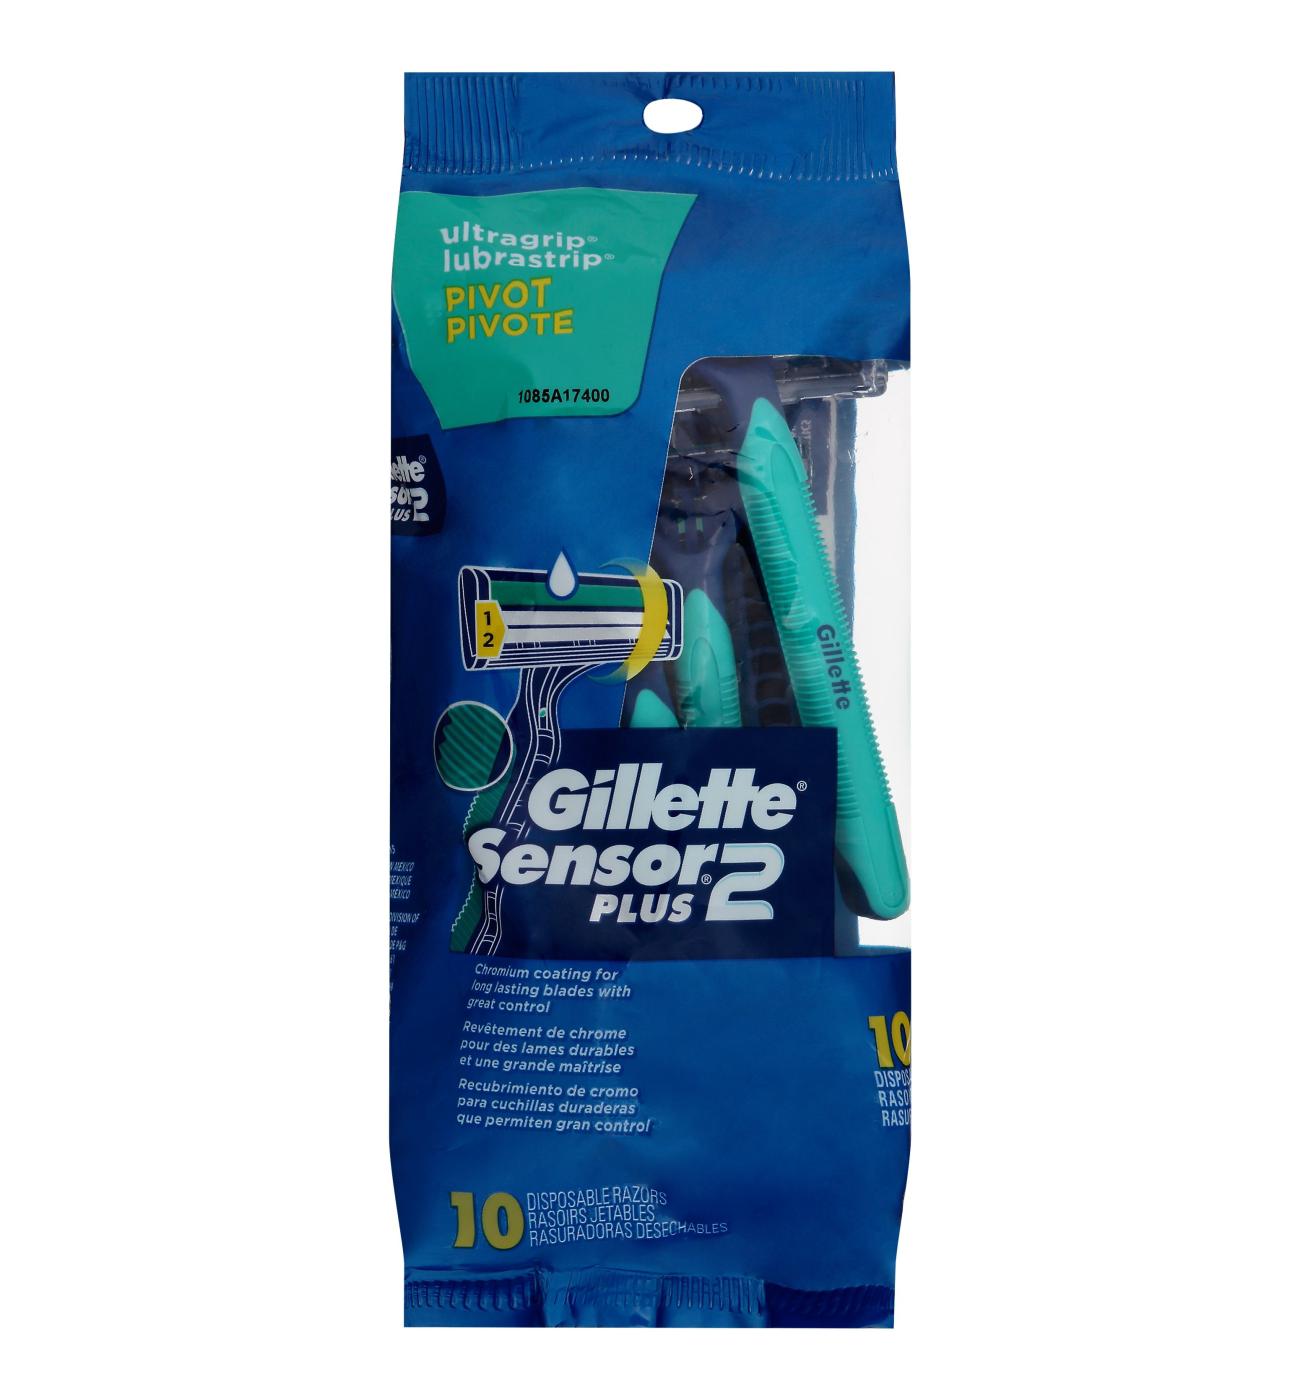 Gillette Sensor2 Plus Pivoting Head Disposable Razors; image 10 of 10